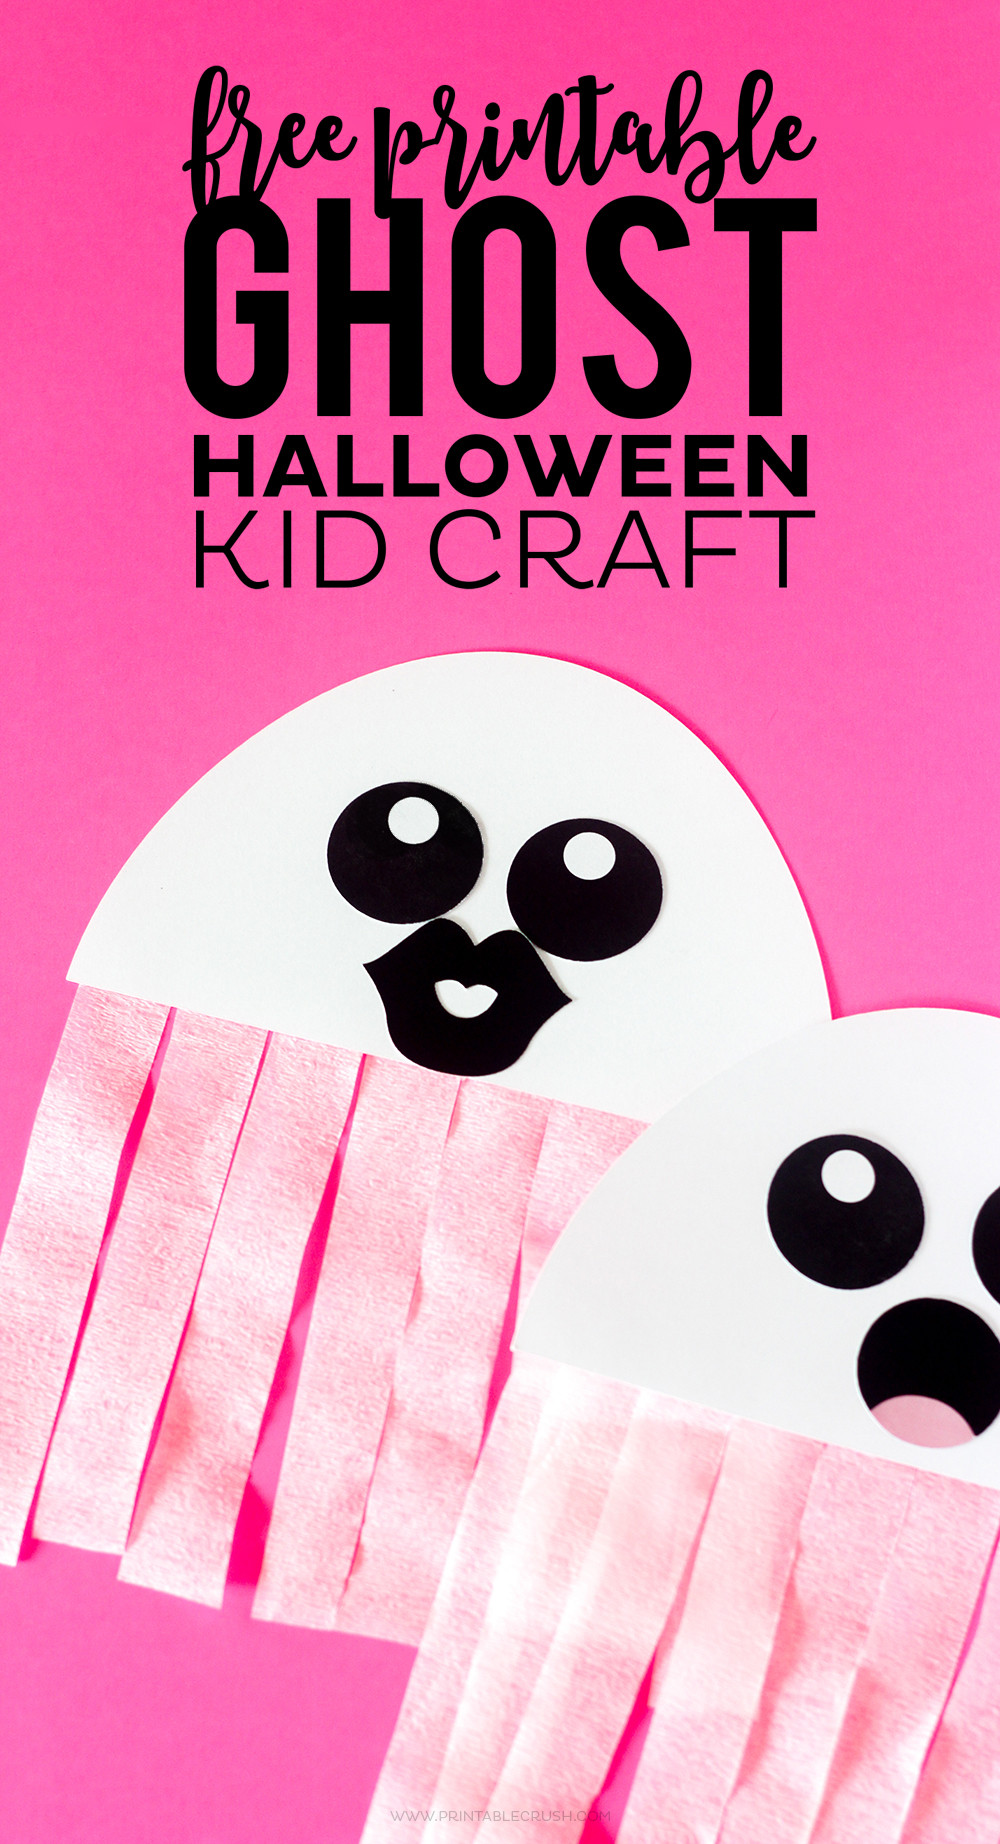 Kids Printable Crafts
 Halloween Kid Crafts The Crafting Chicks